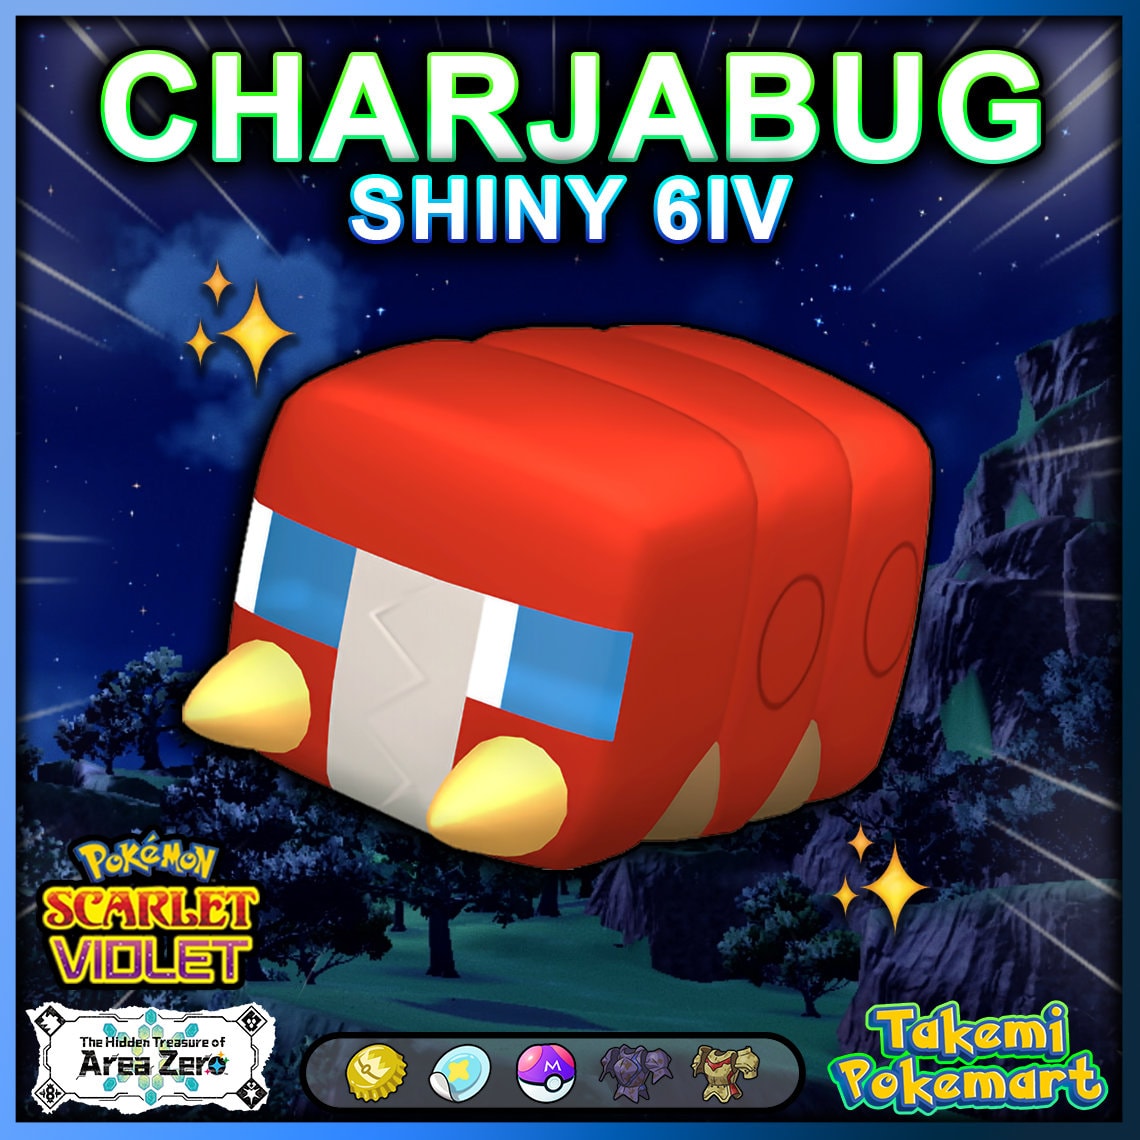 Pokemon GO: Shiny Grubbin, Shiny Charjabug, and Shiny Vikavolt guide